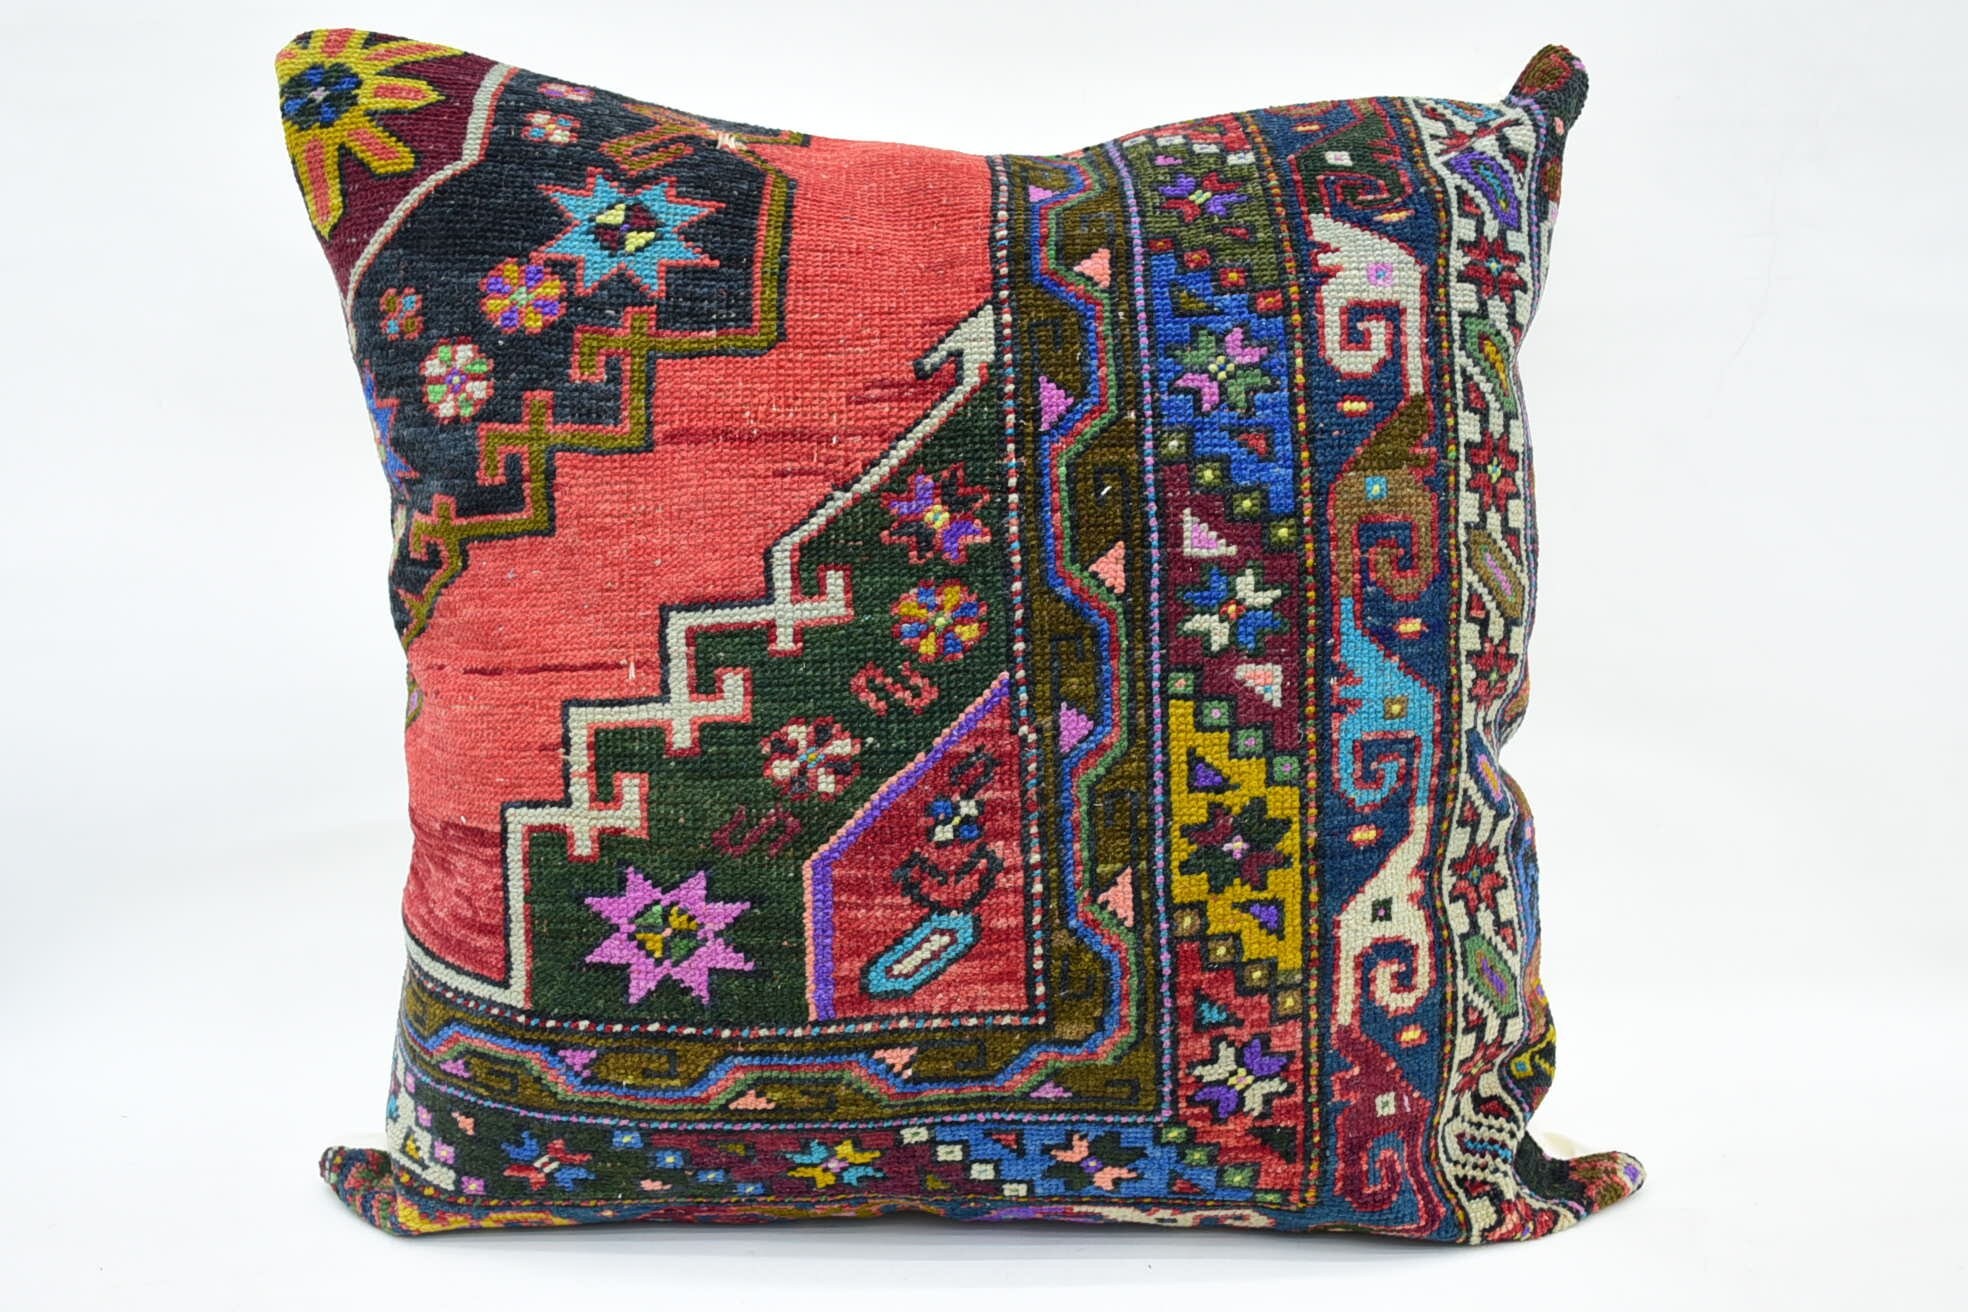 Nautical Throw Cushion, Gift Pillow, Ethnical Kilim Rug Pillow, Chair Cushion Cover, Kilim Pillow, 32"x32" Red Cushion